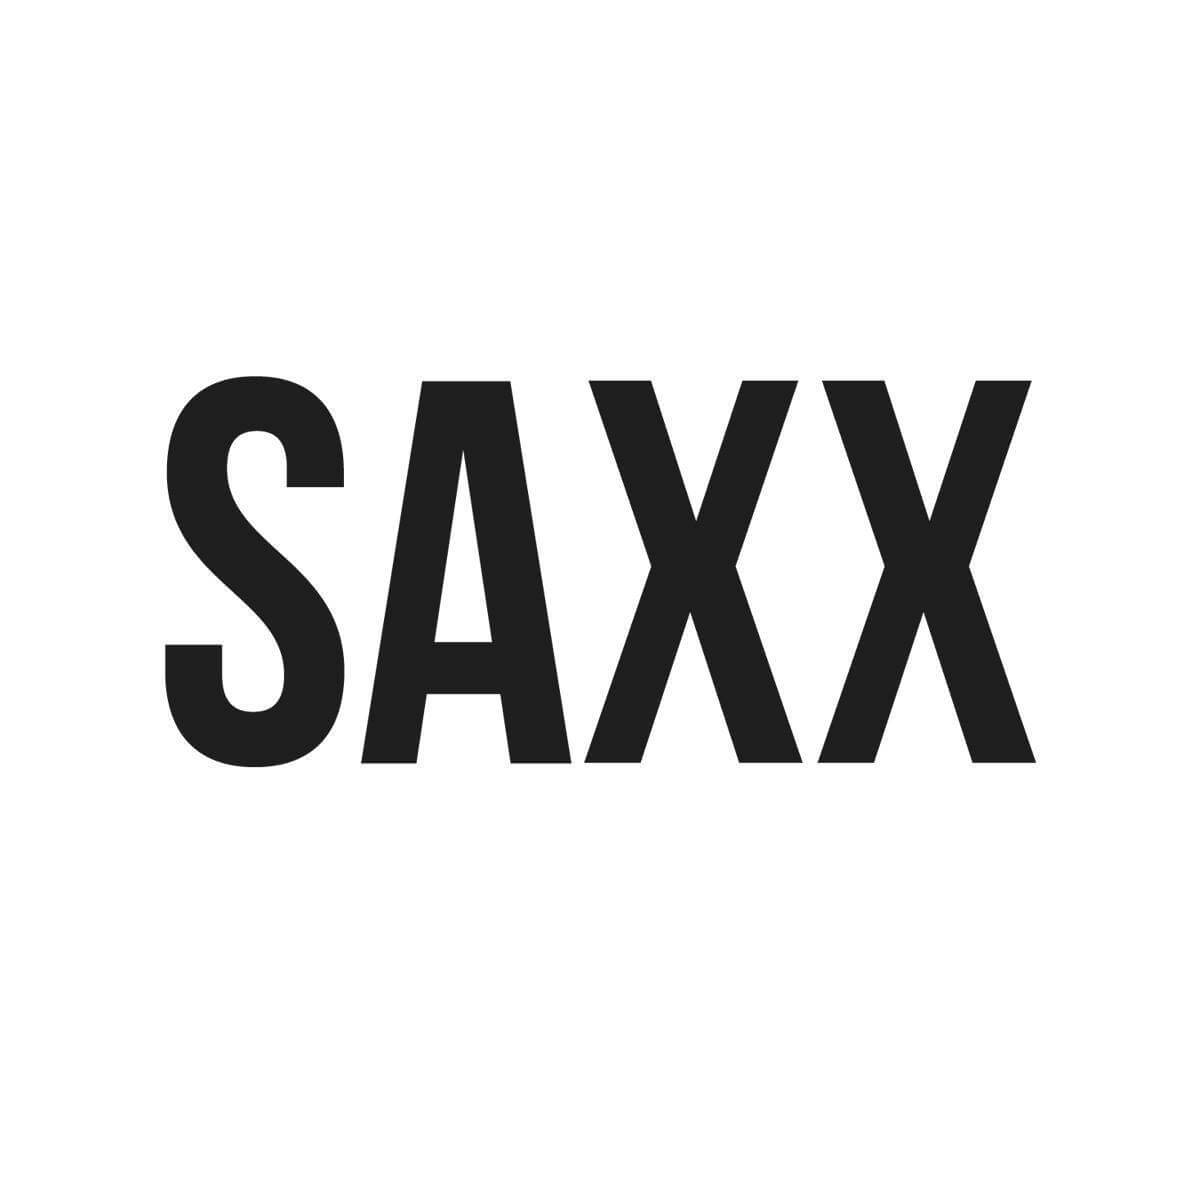 www.saxxunderwear.ca